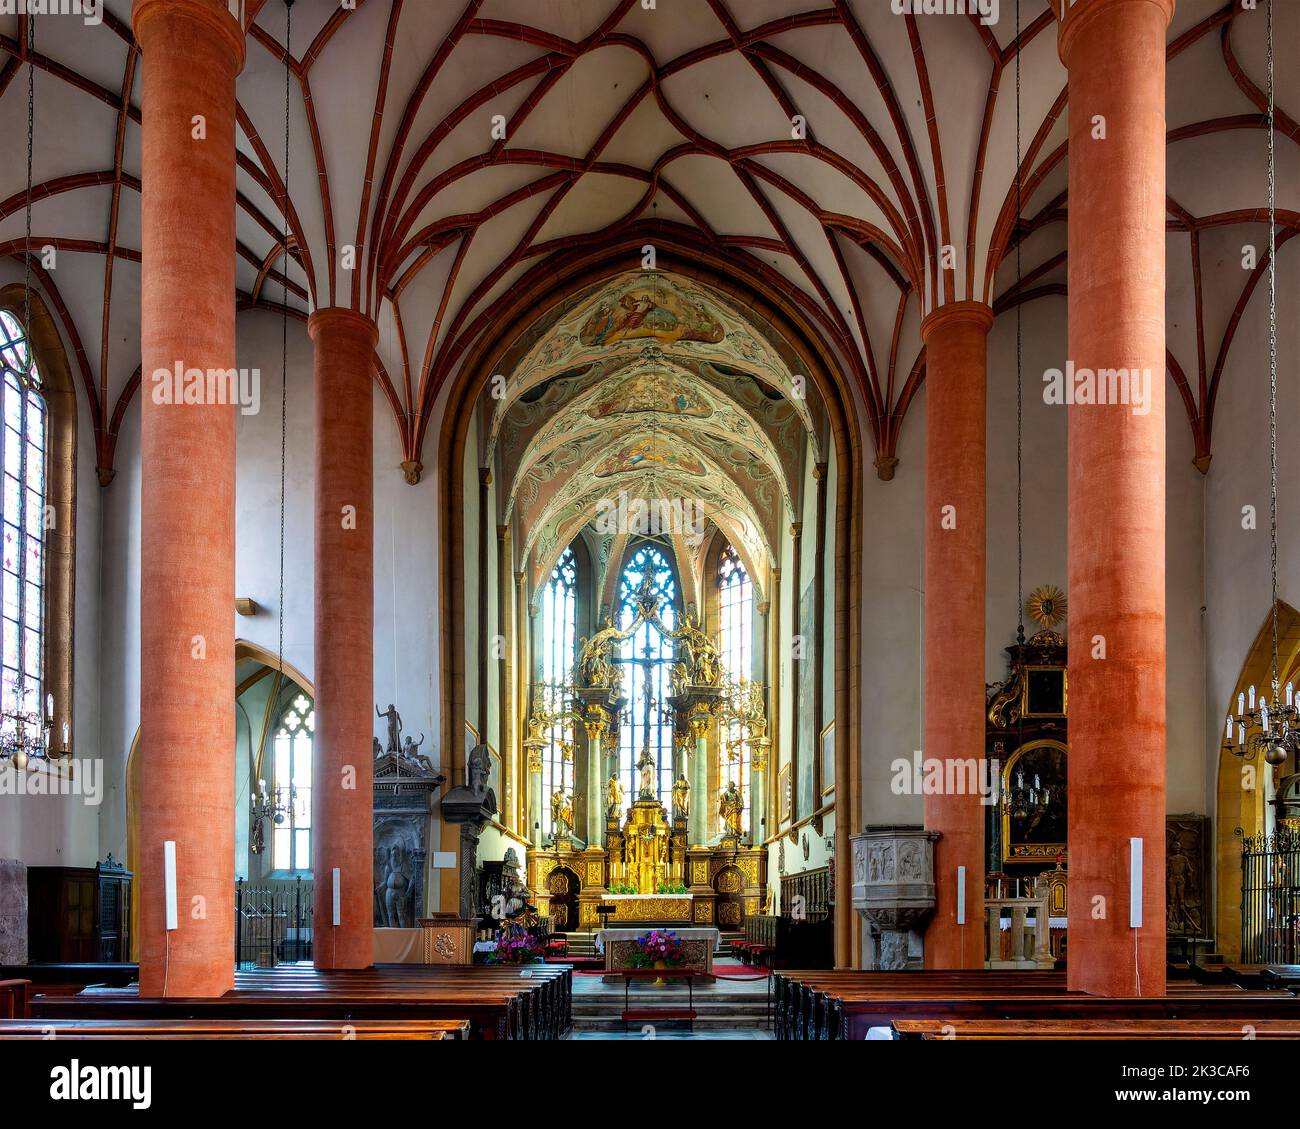 Nave central del Jakobskirche, Villach, Austria, Foto de stock